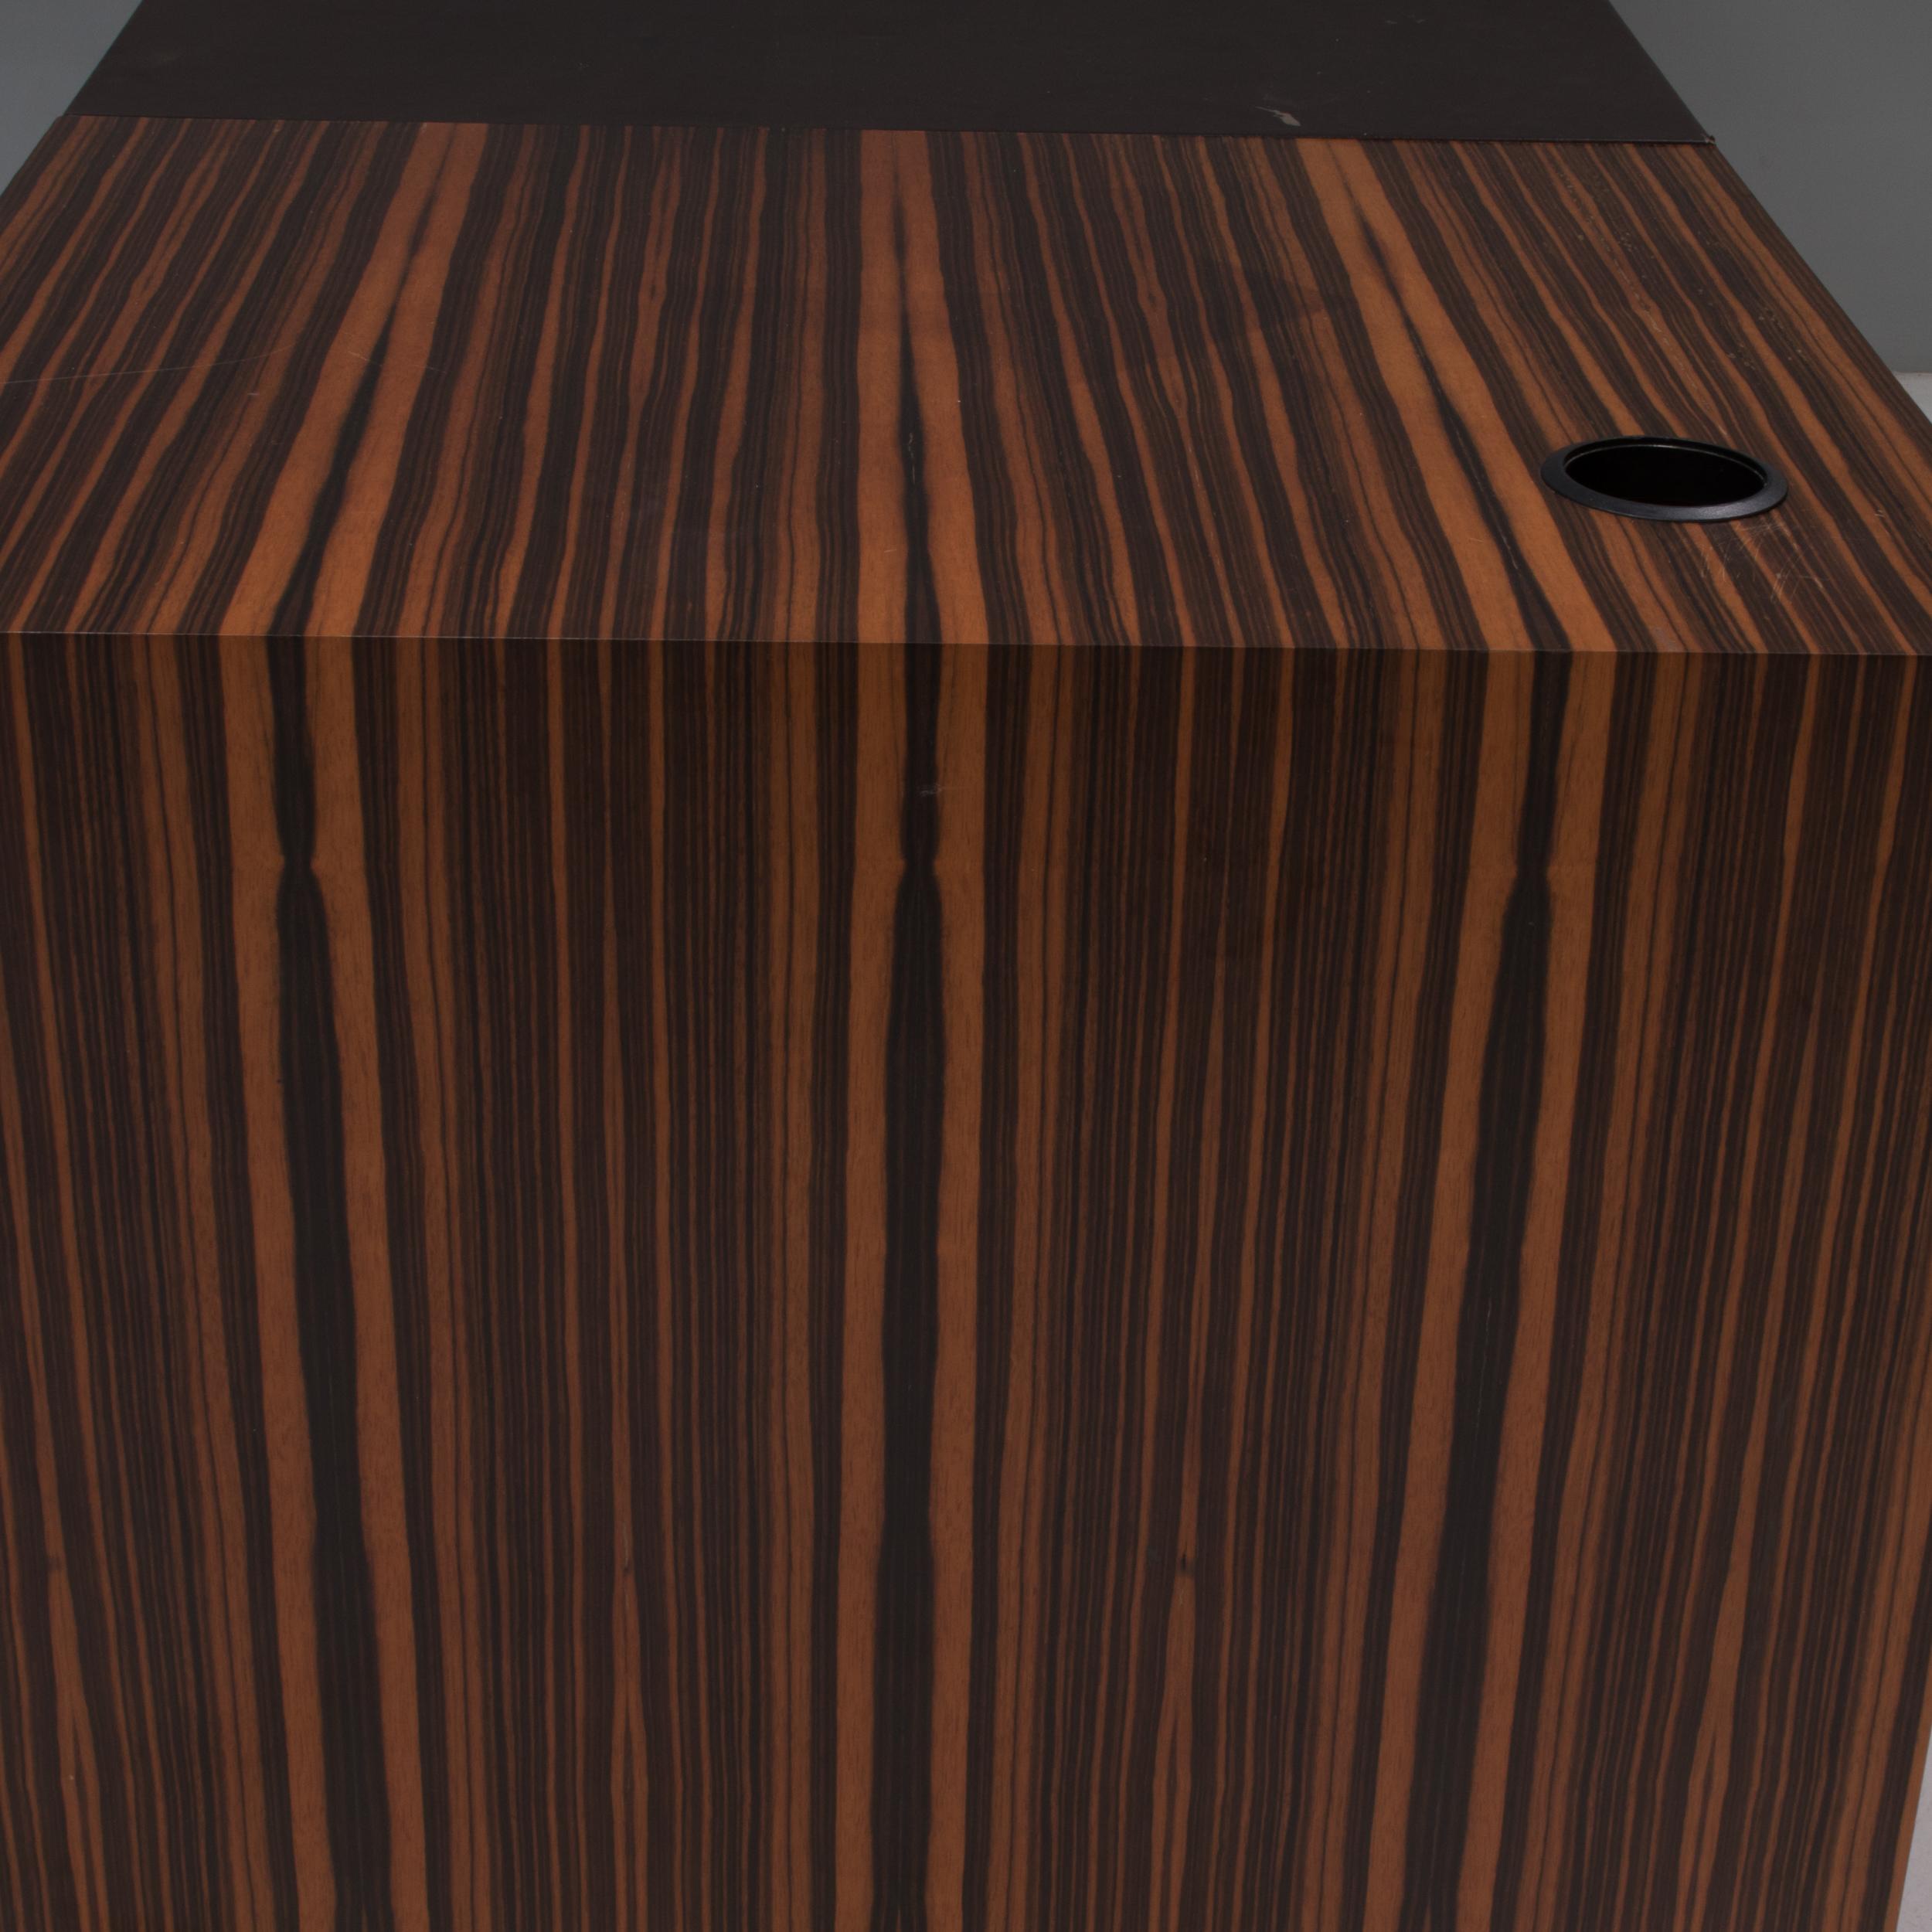 Poliform Wood & Leather Desk With Storage Units 14